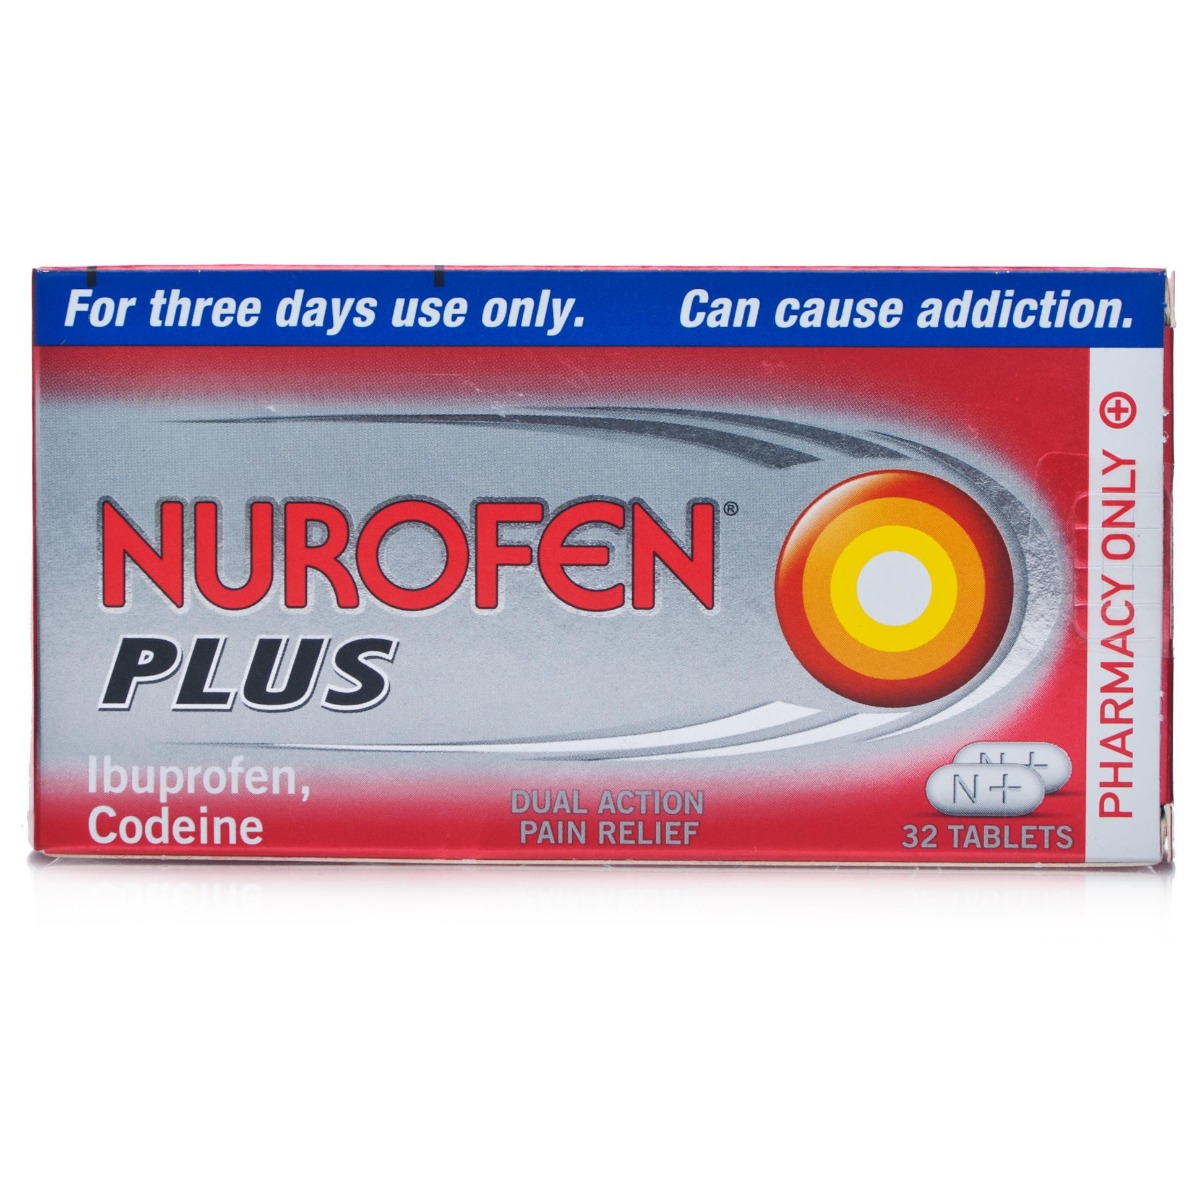  Relieve Pain and Discomfort with Nurofen Plus: Ibuprofen & Codeine Tablets